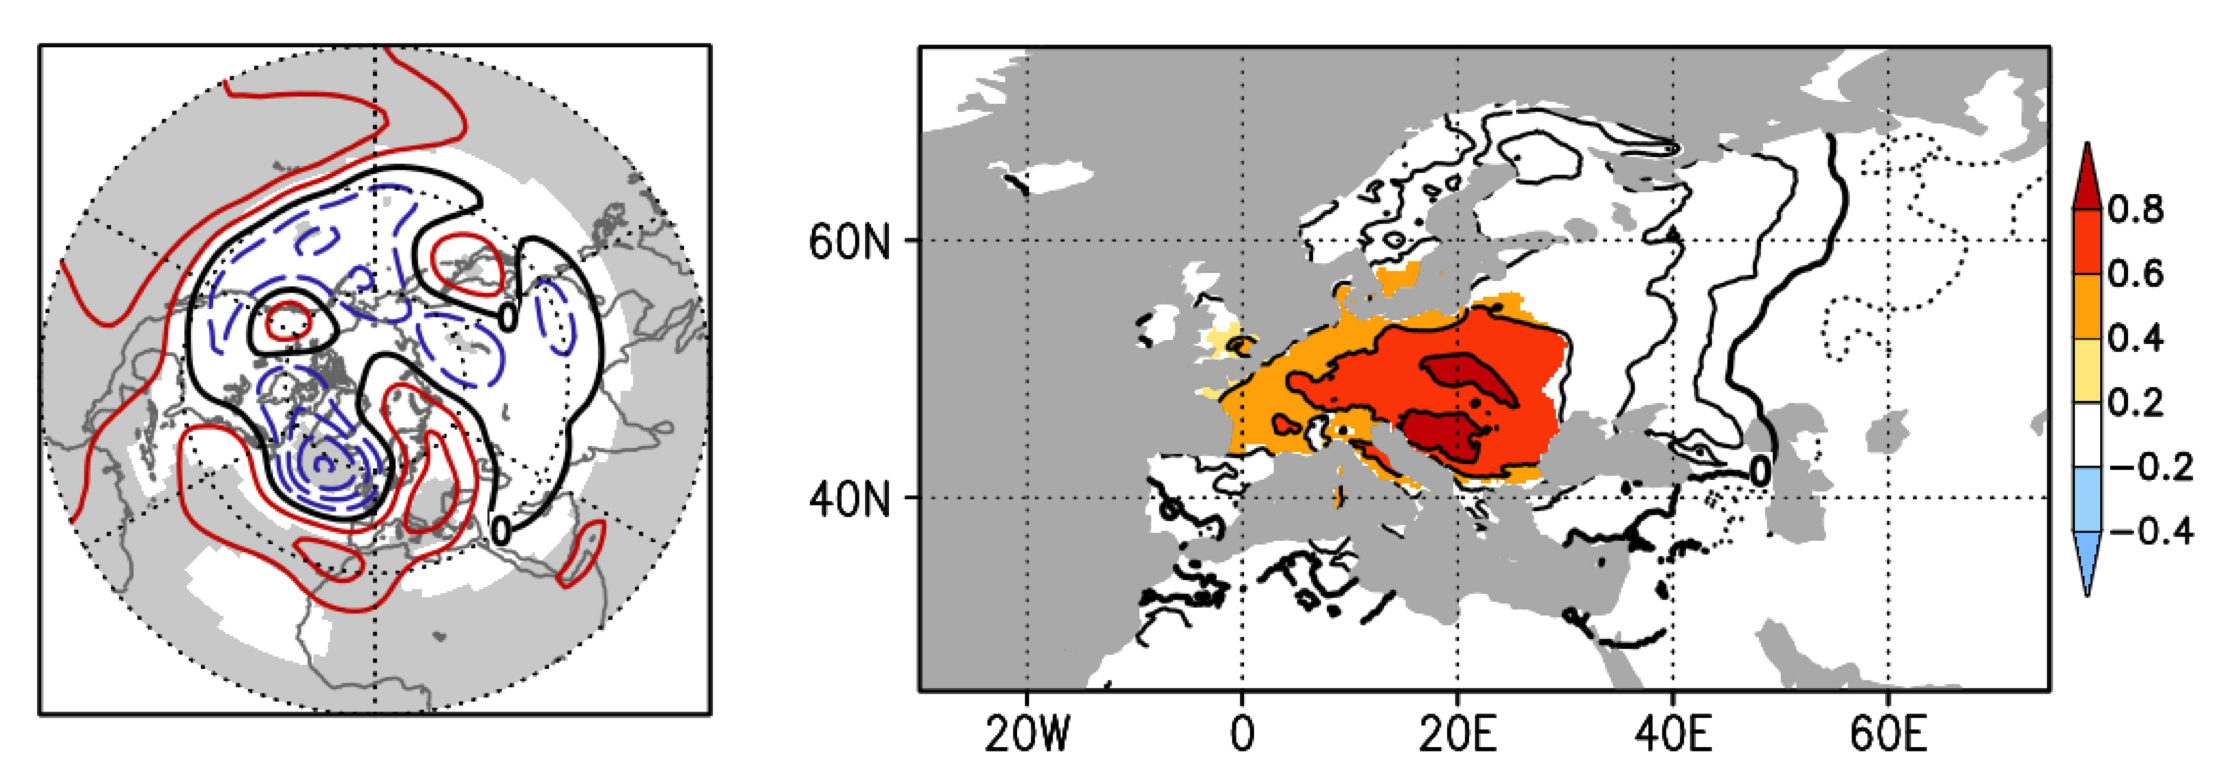 ENSO influence on European weather